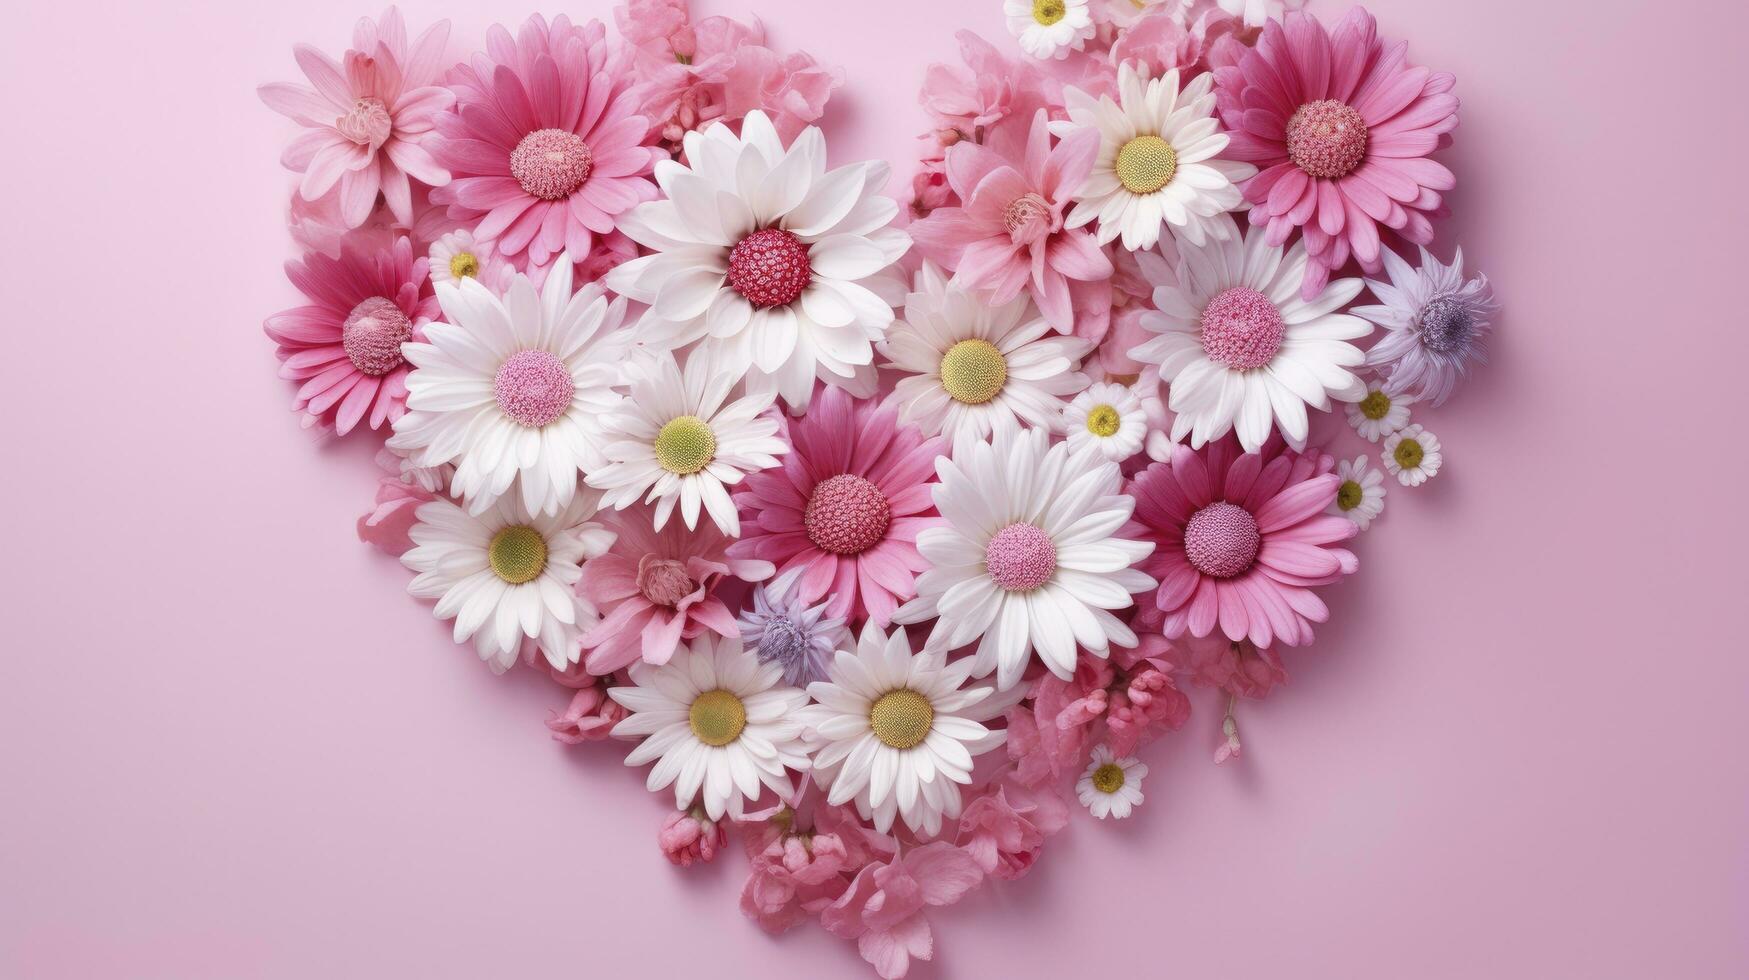 AI generated Flower Heart Shape Pastel Pink Background photo